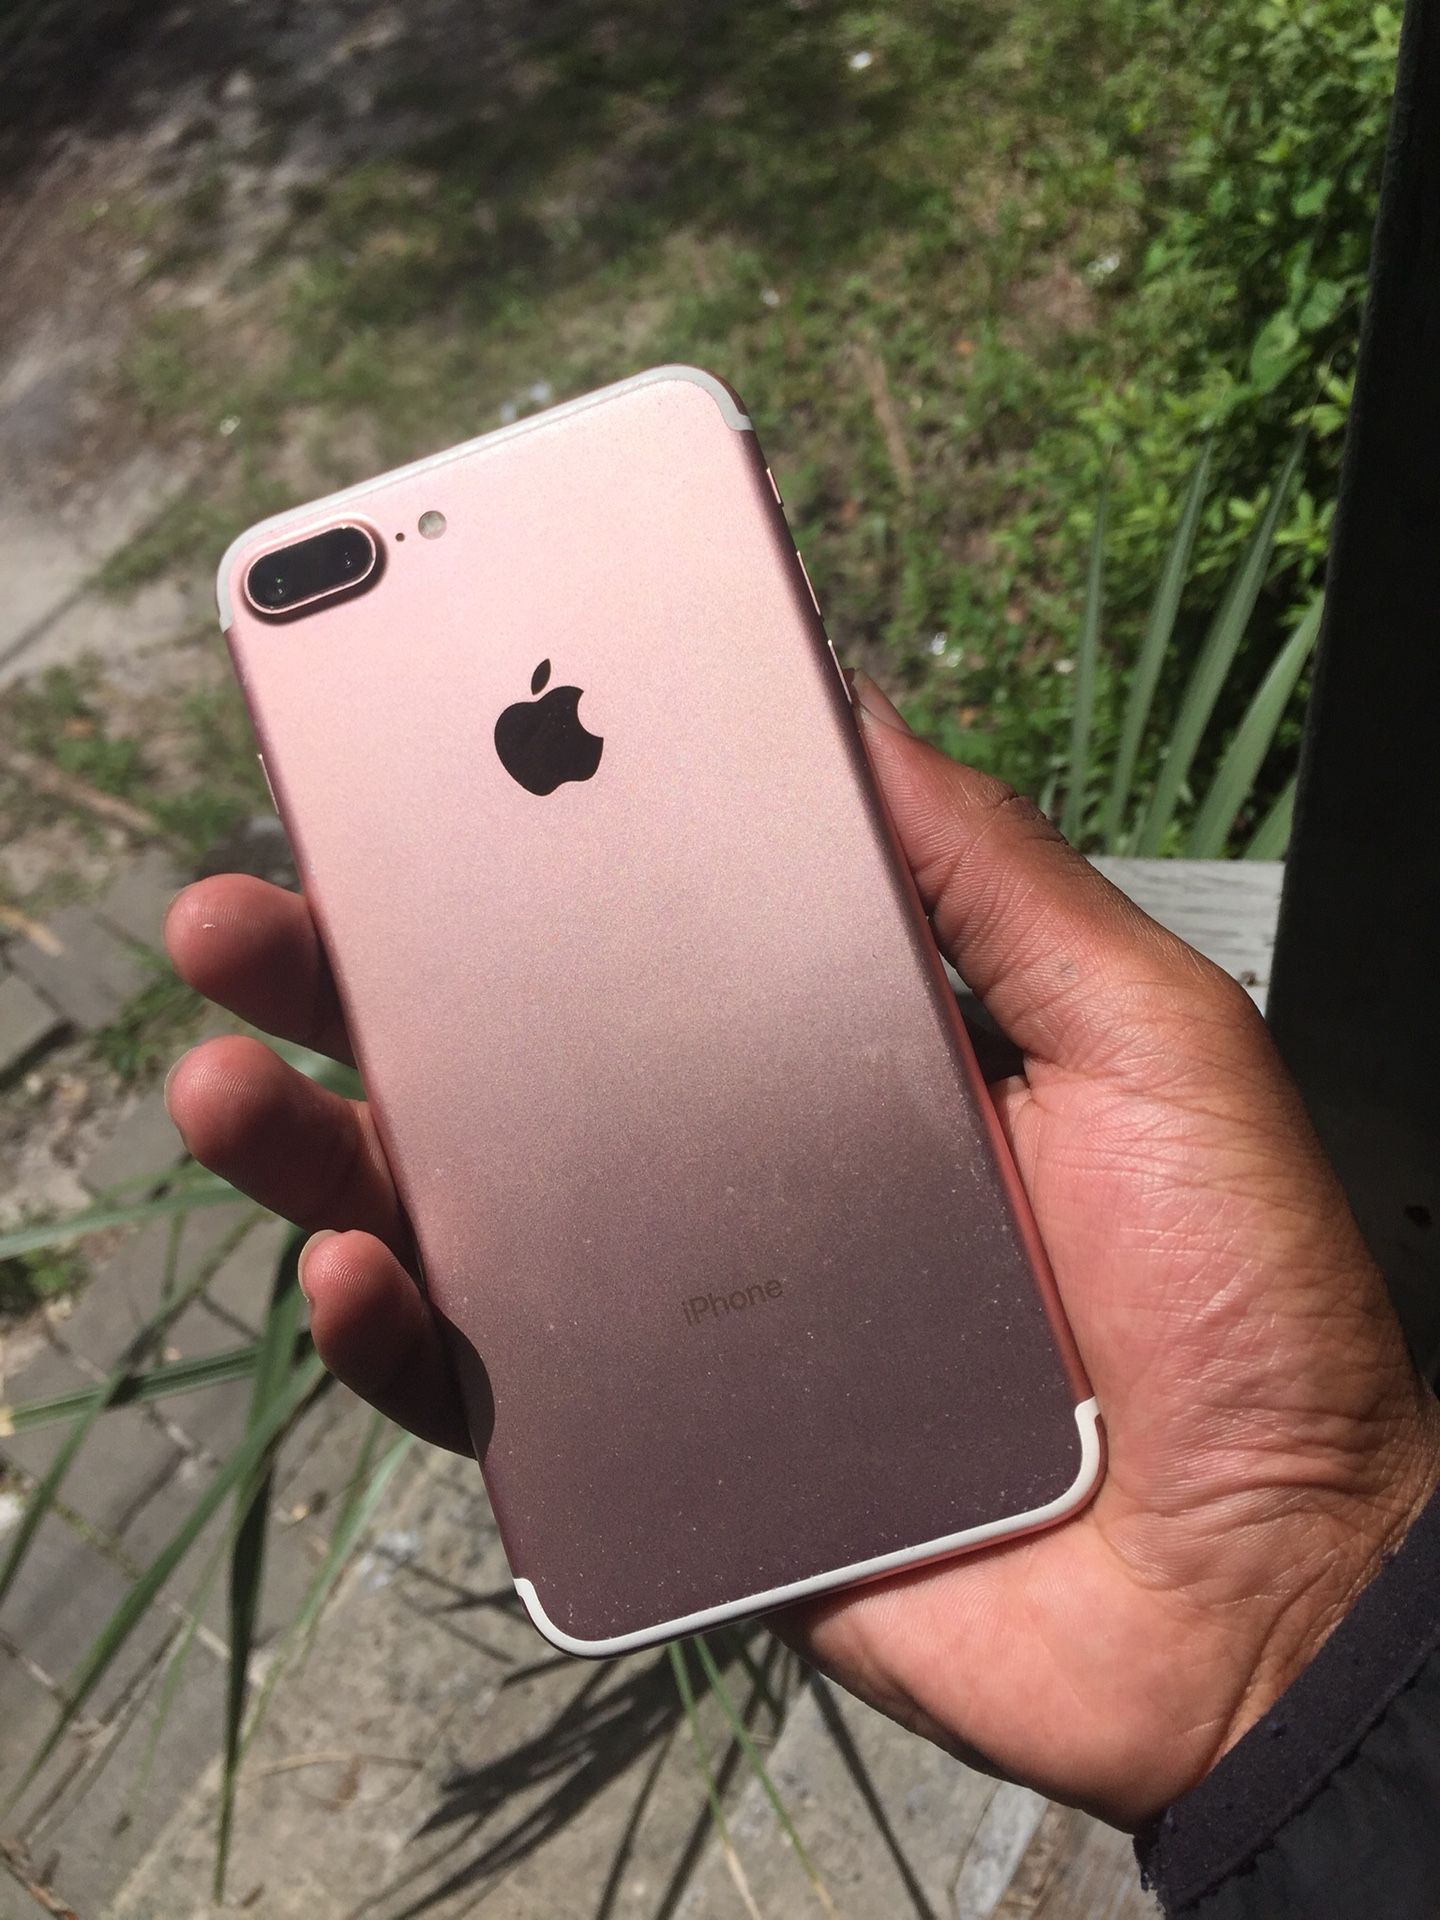 iPhone 7+ PLUS 128GB Rose Gold Broken LCD (T-Mobile)